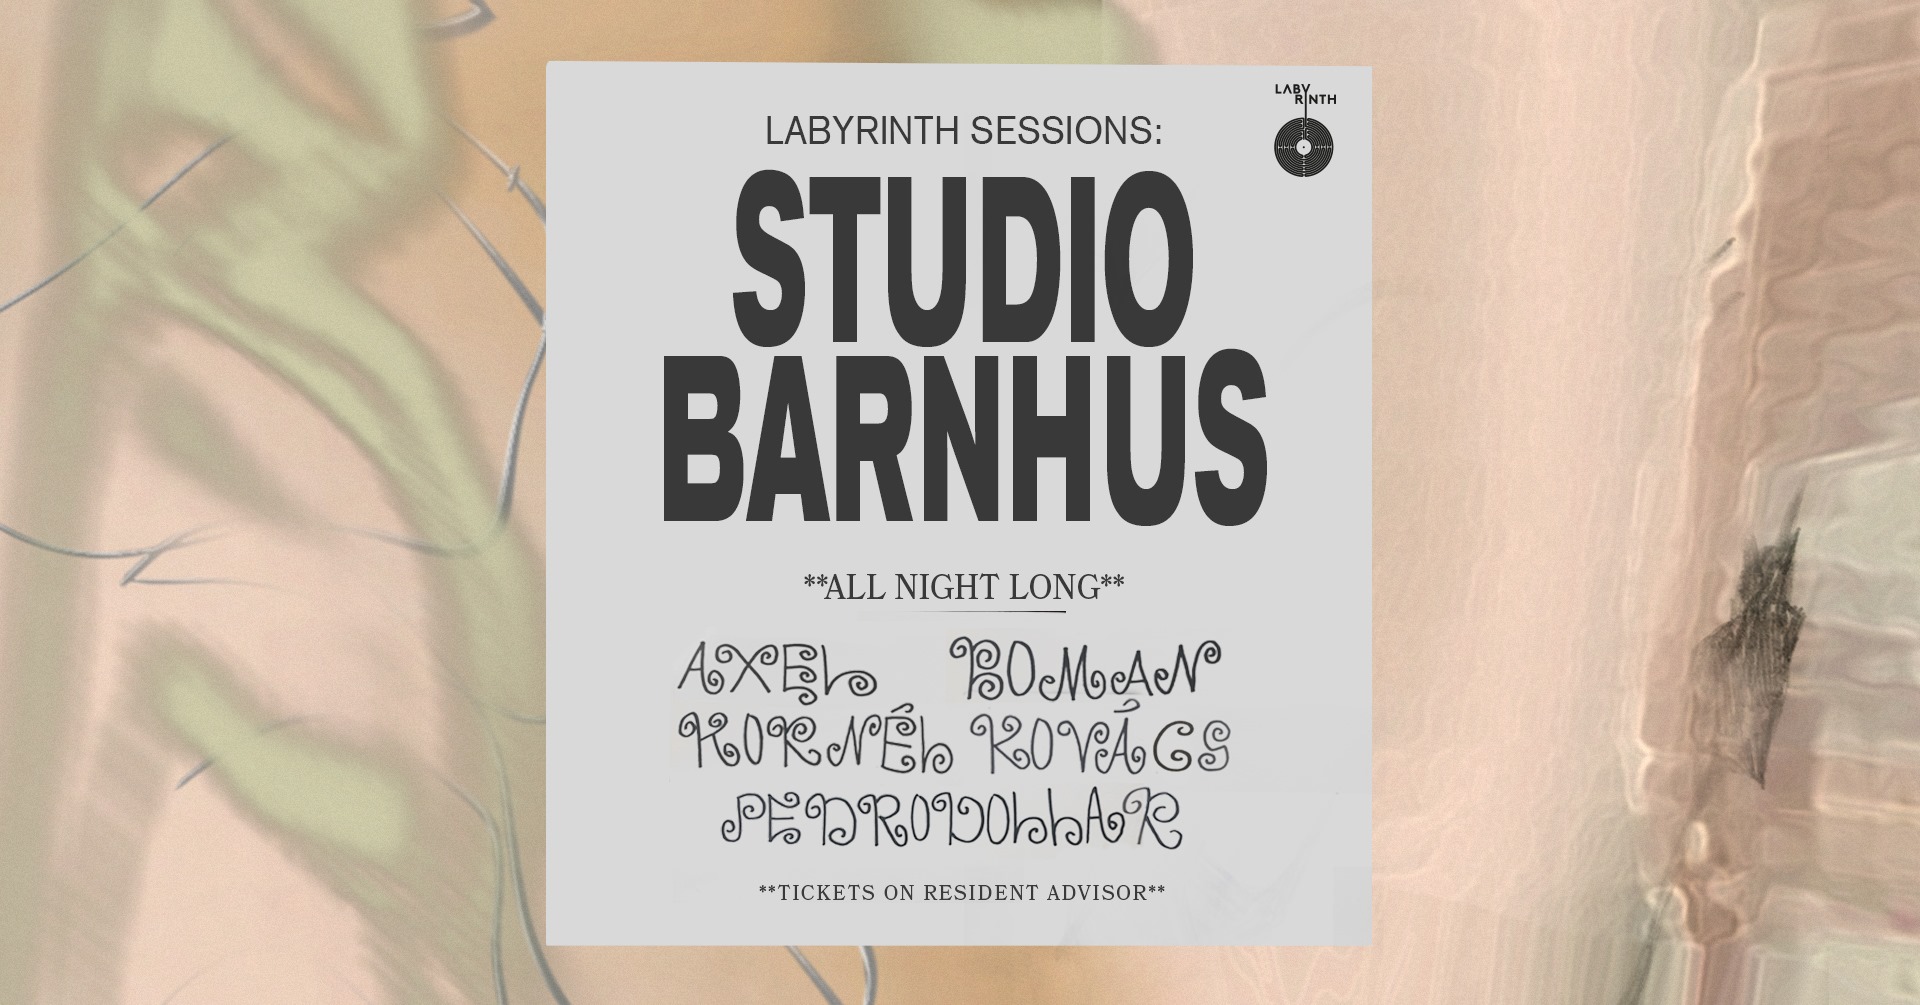 Labyrinth Sessions: Studio Barnhus All Night Long